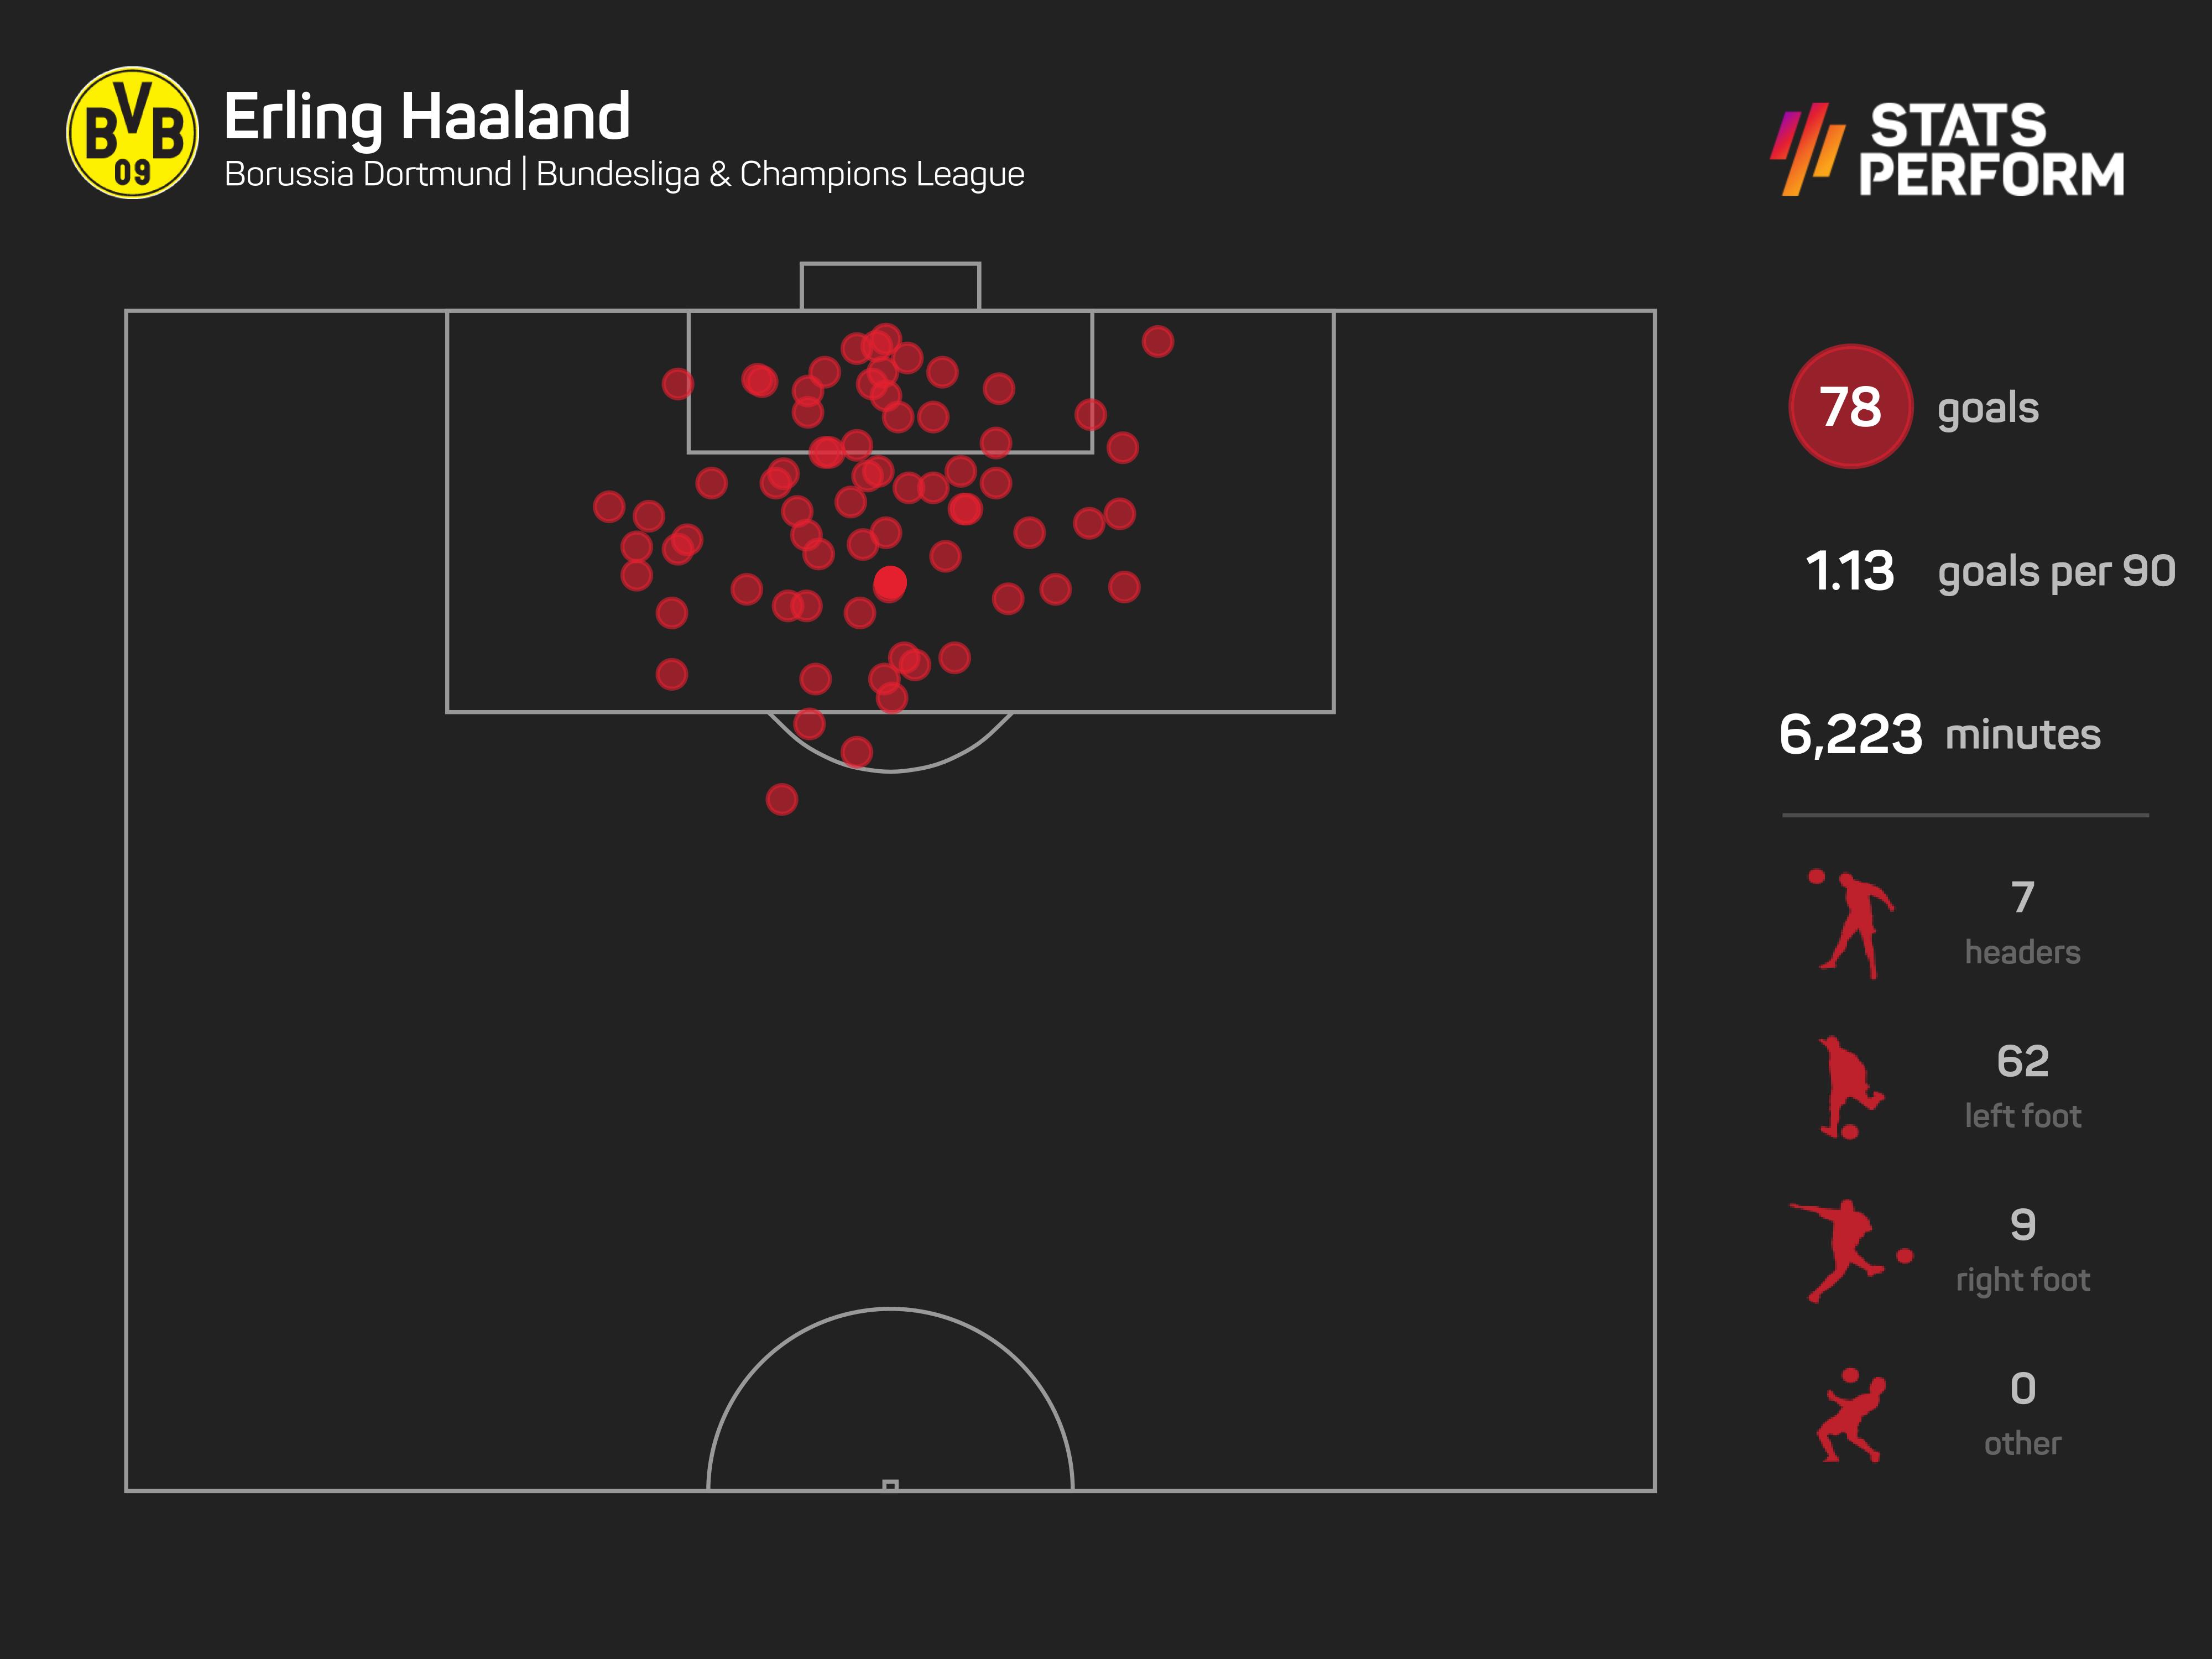 Erling Haaland has been prolific for Borussia Dortmund